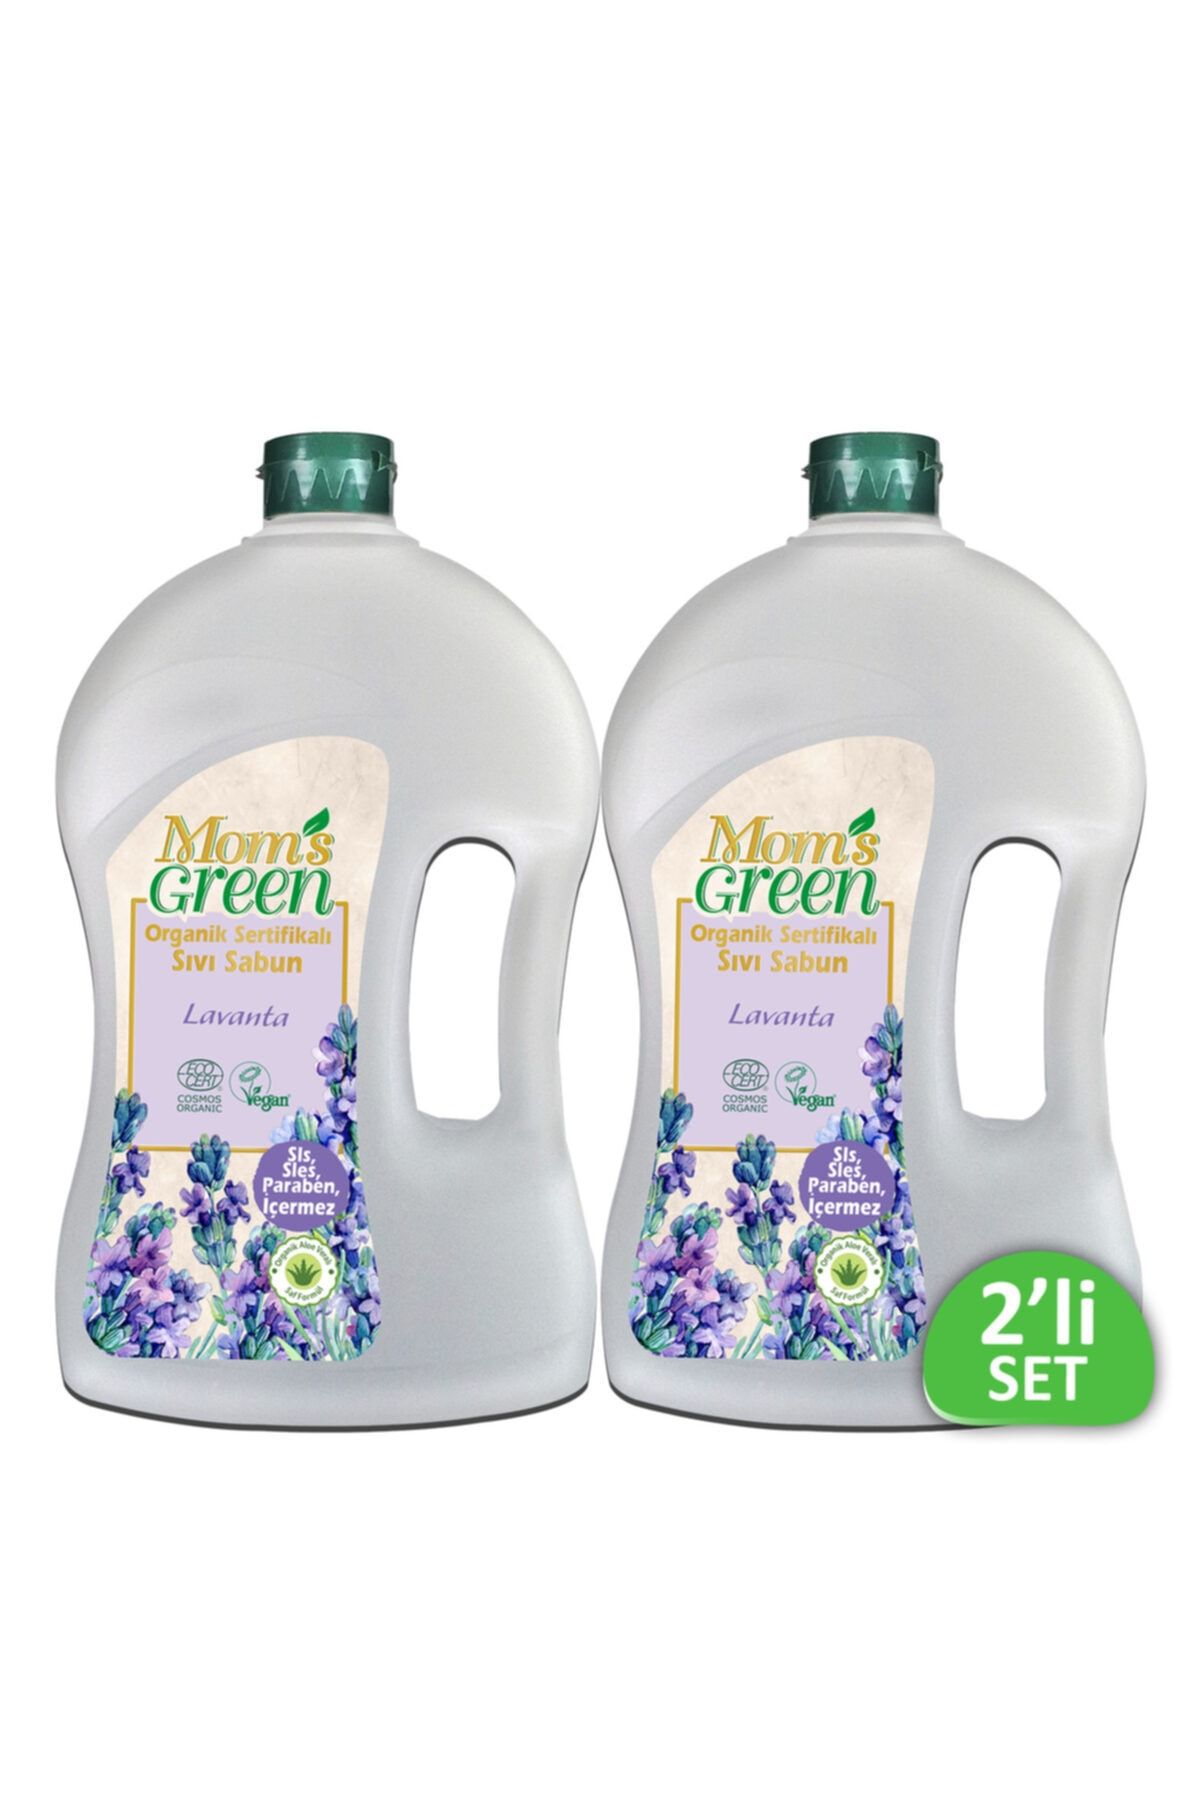 Mom's Green 2'li Set Organik Sertifikalı Sıvı Sabun - Lavanta 1500 Ml*2 Adet